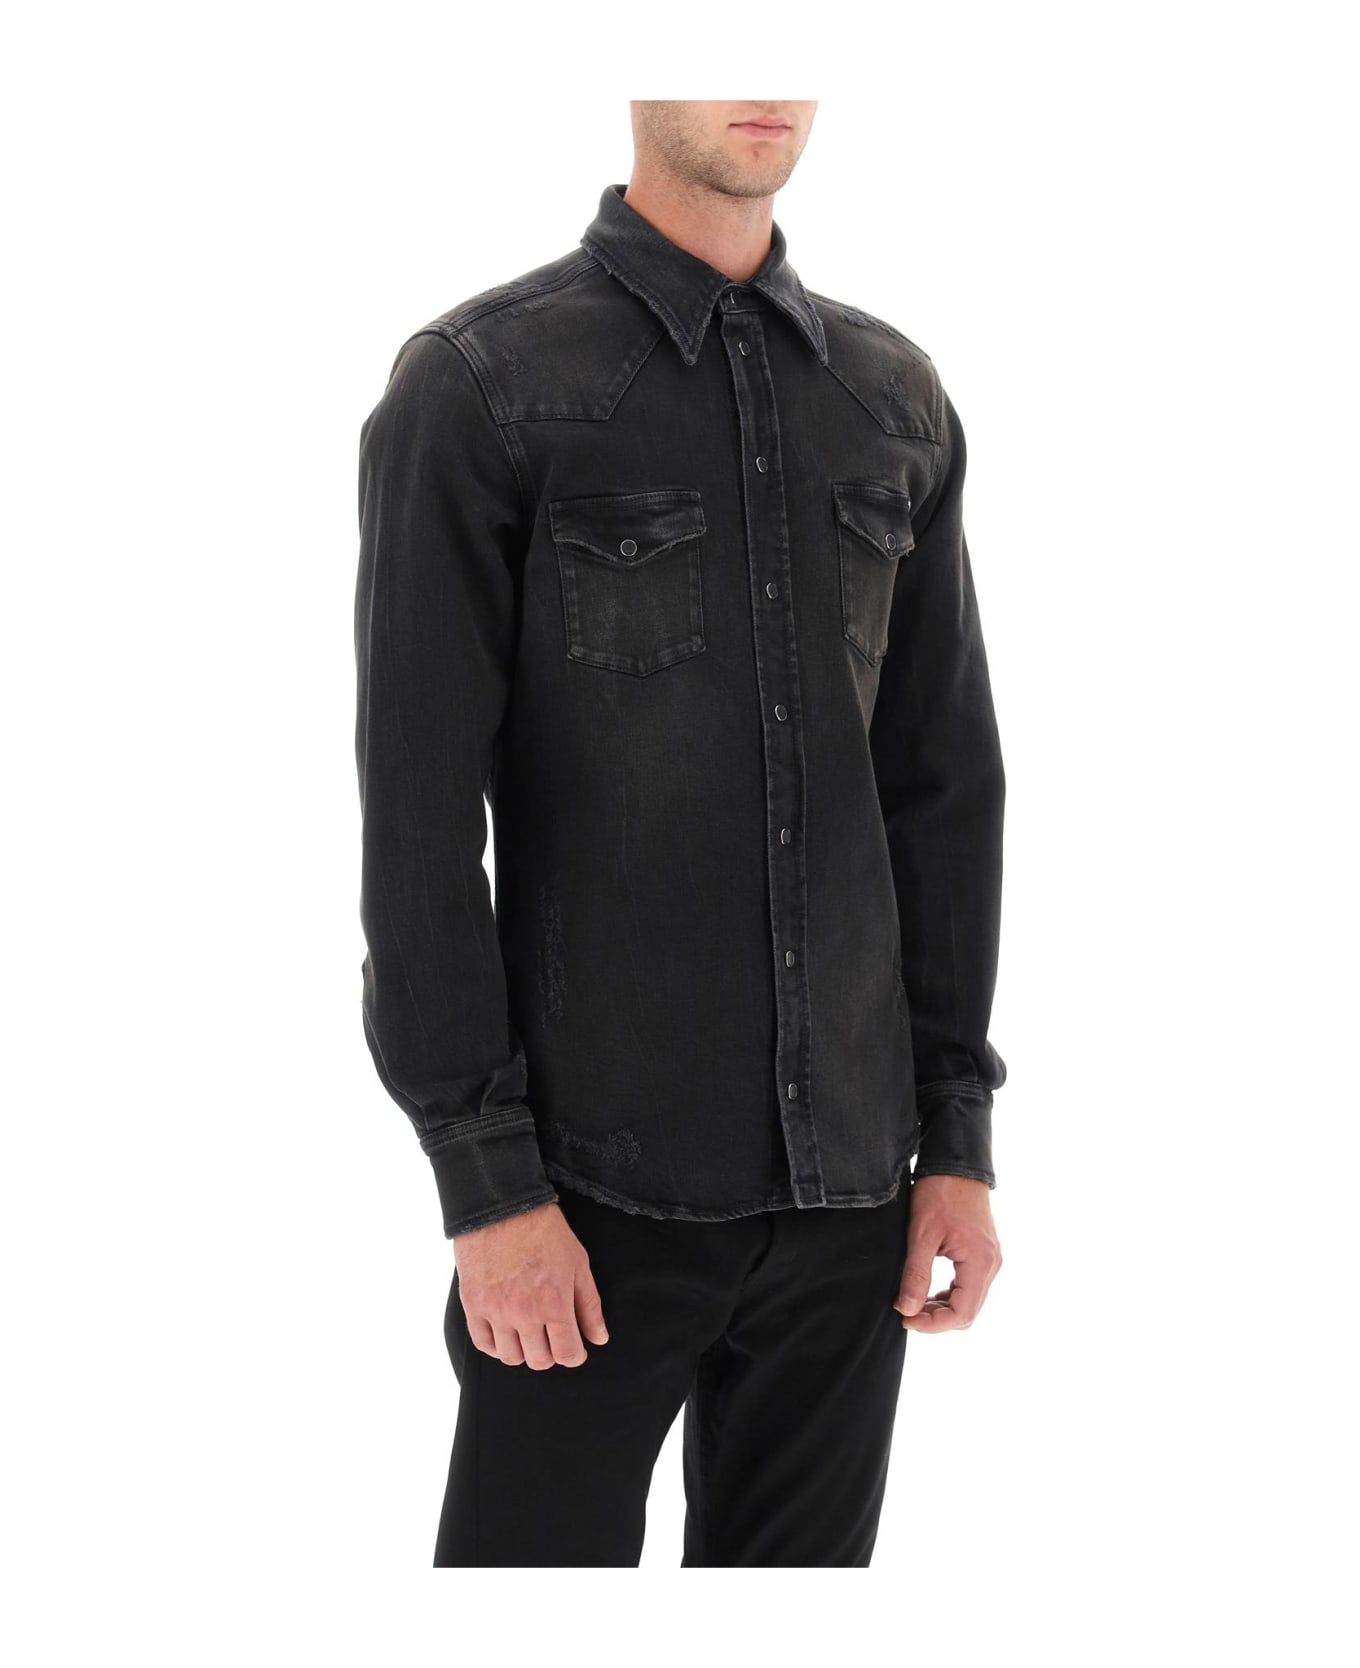 Dolce & Gabbana Distressed Denim Western Shirt - VARIANTE ABBINATA (Black) シャツ